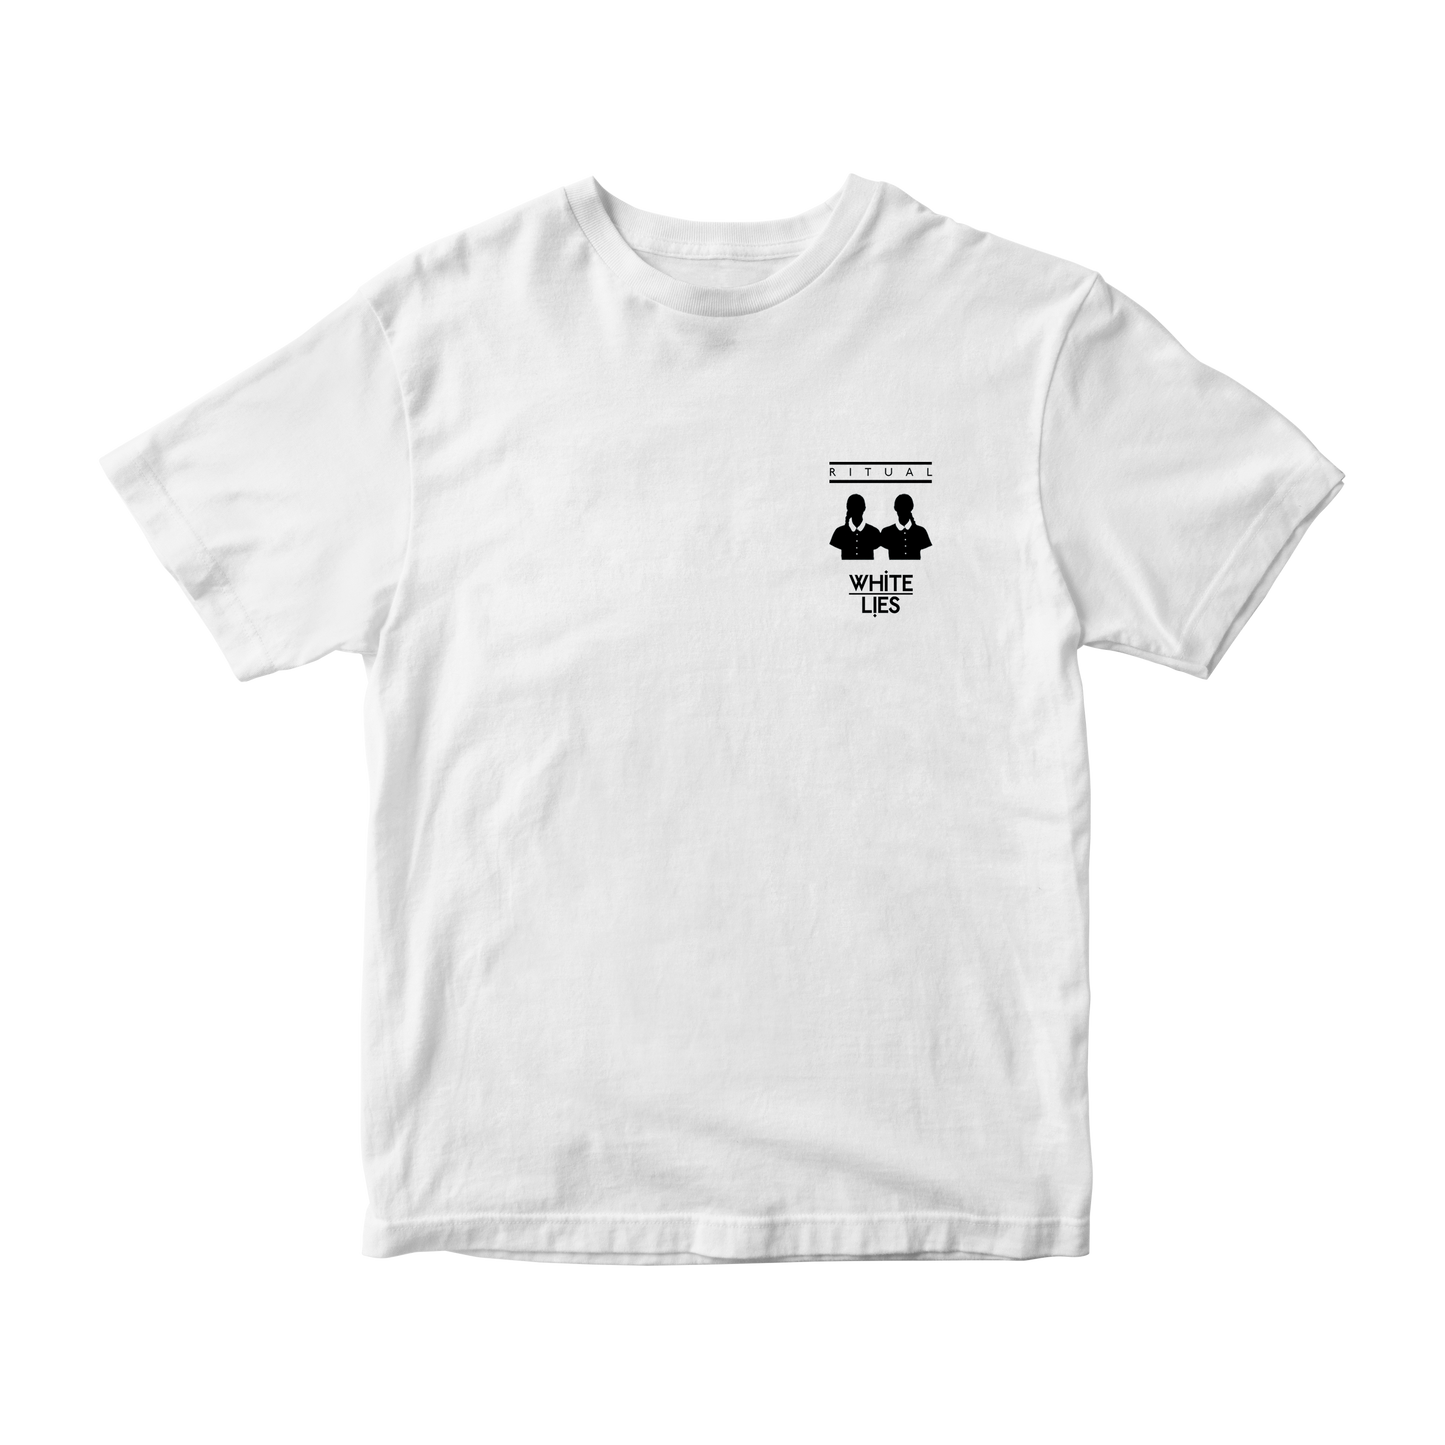 Ritual | T-shirt (Black/White)